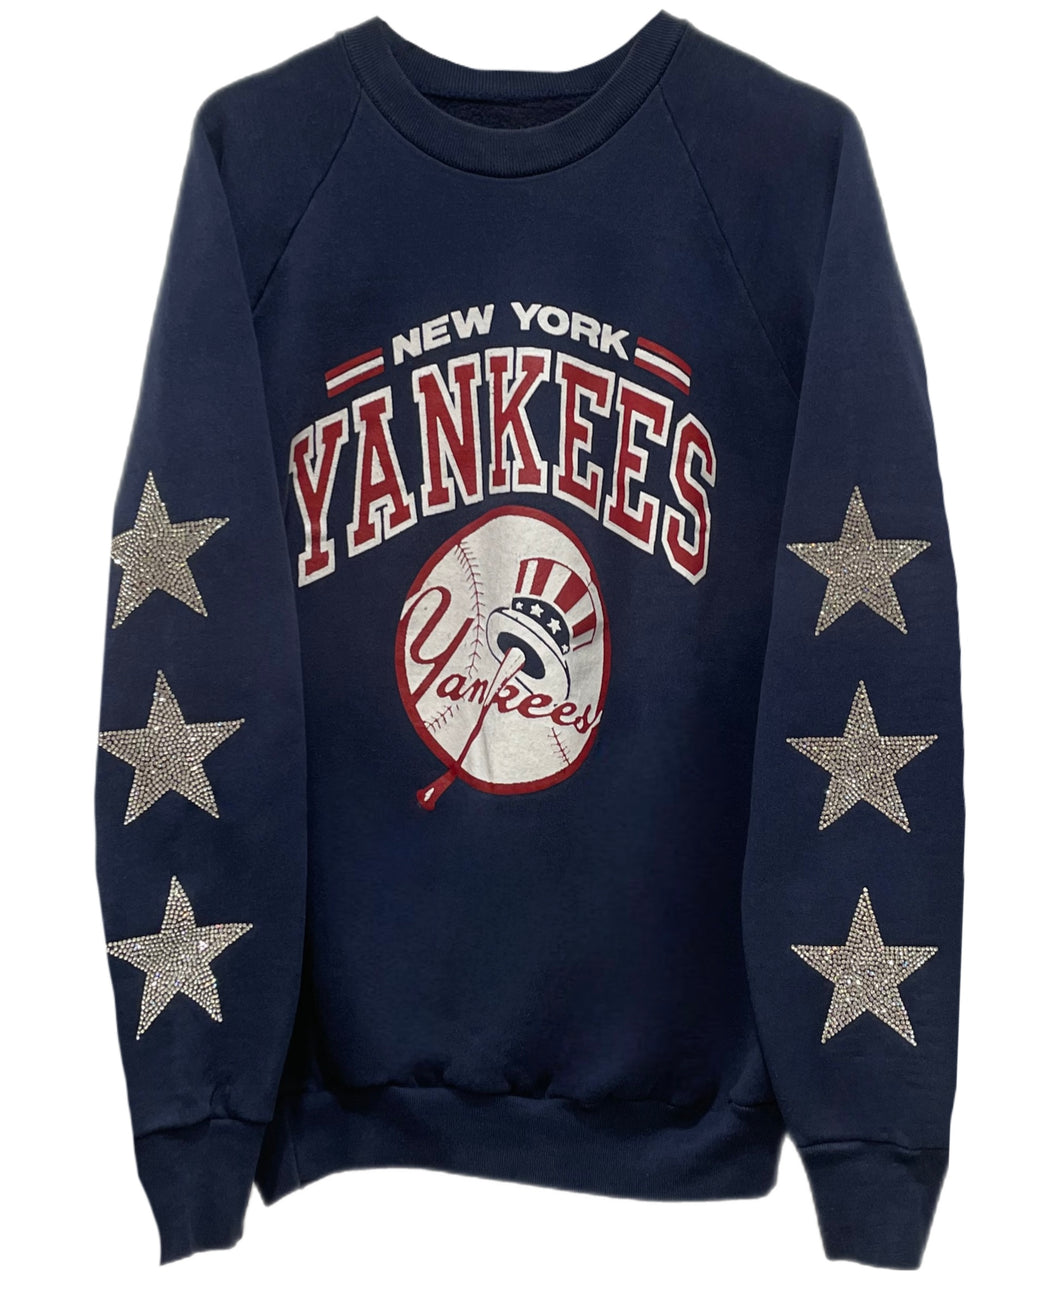 NY Yankees, MLB One of a KIND Vintage Sweatshirt with Three Crystal Star Design